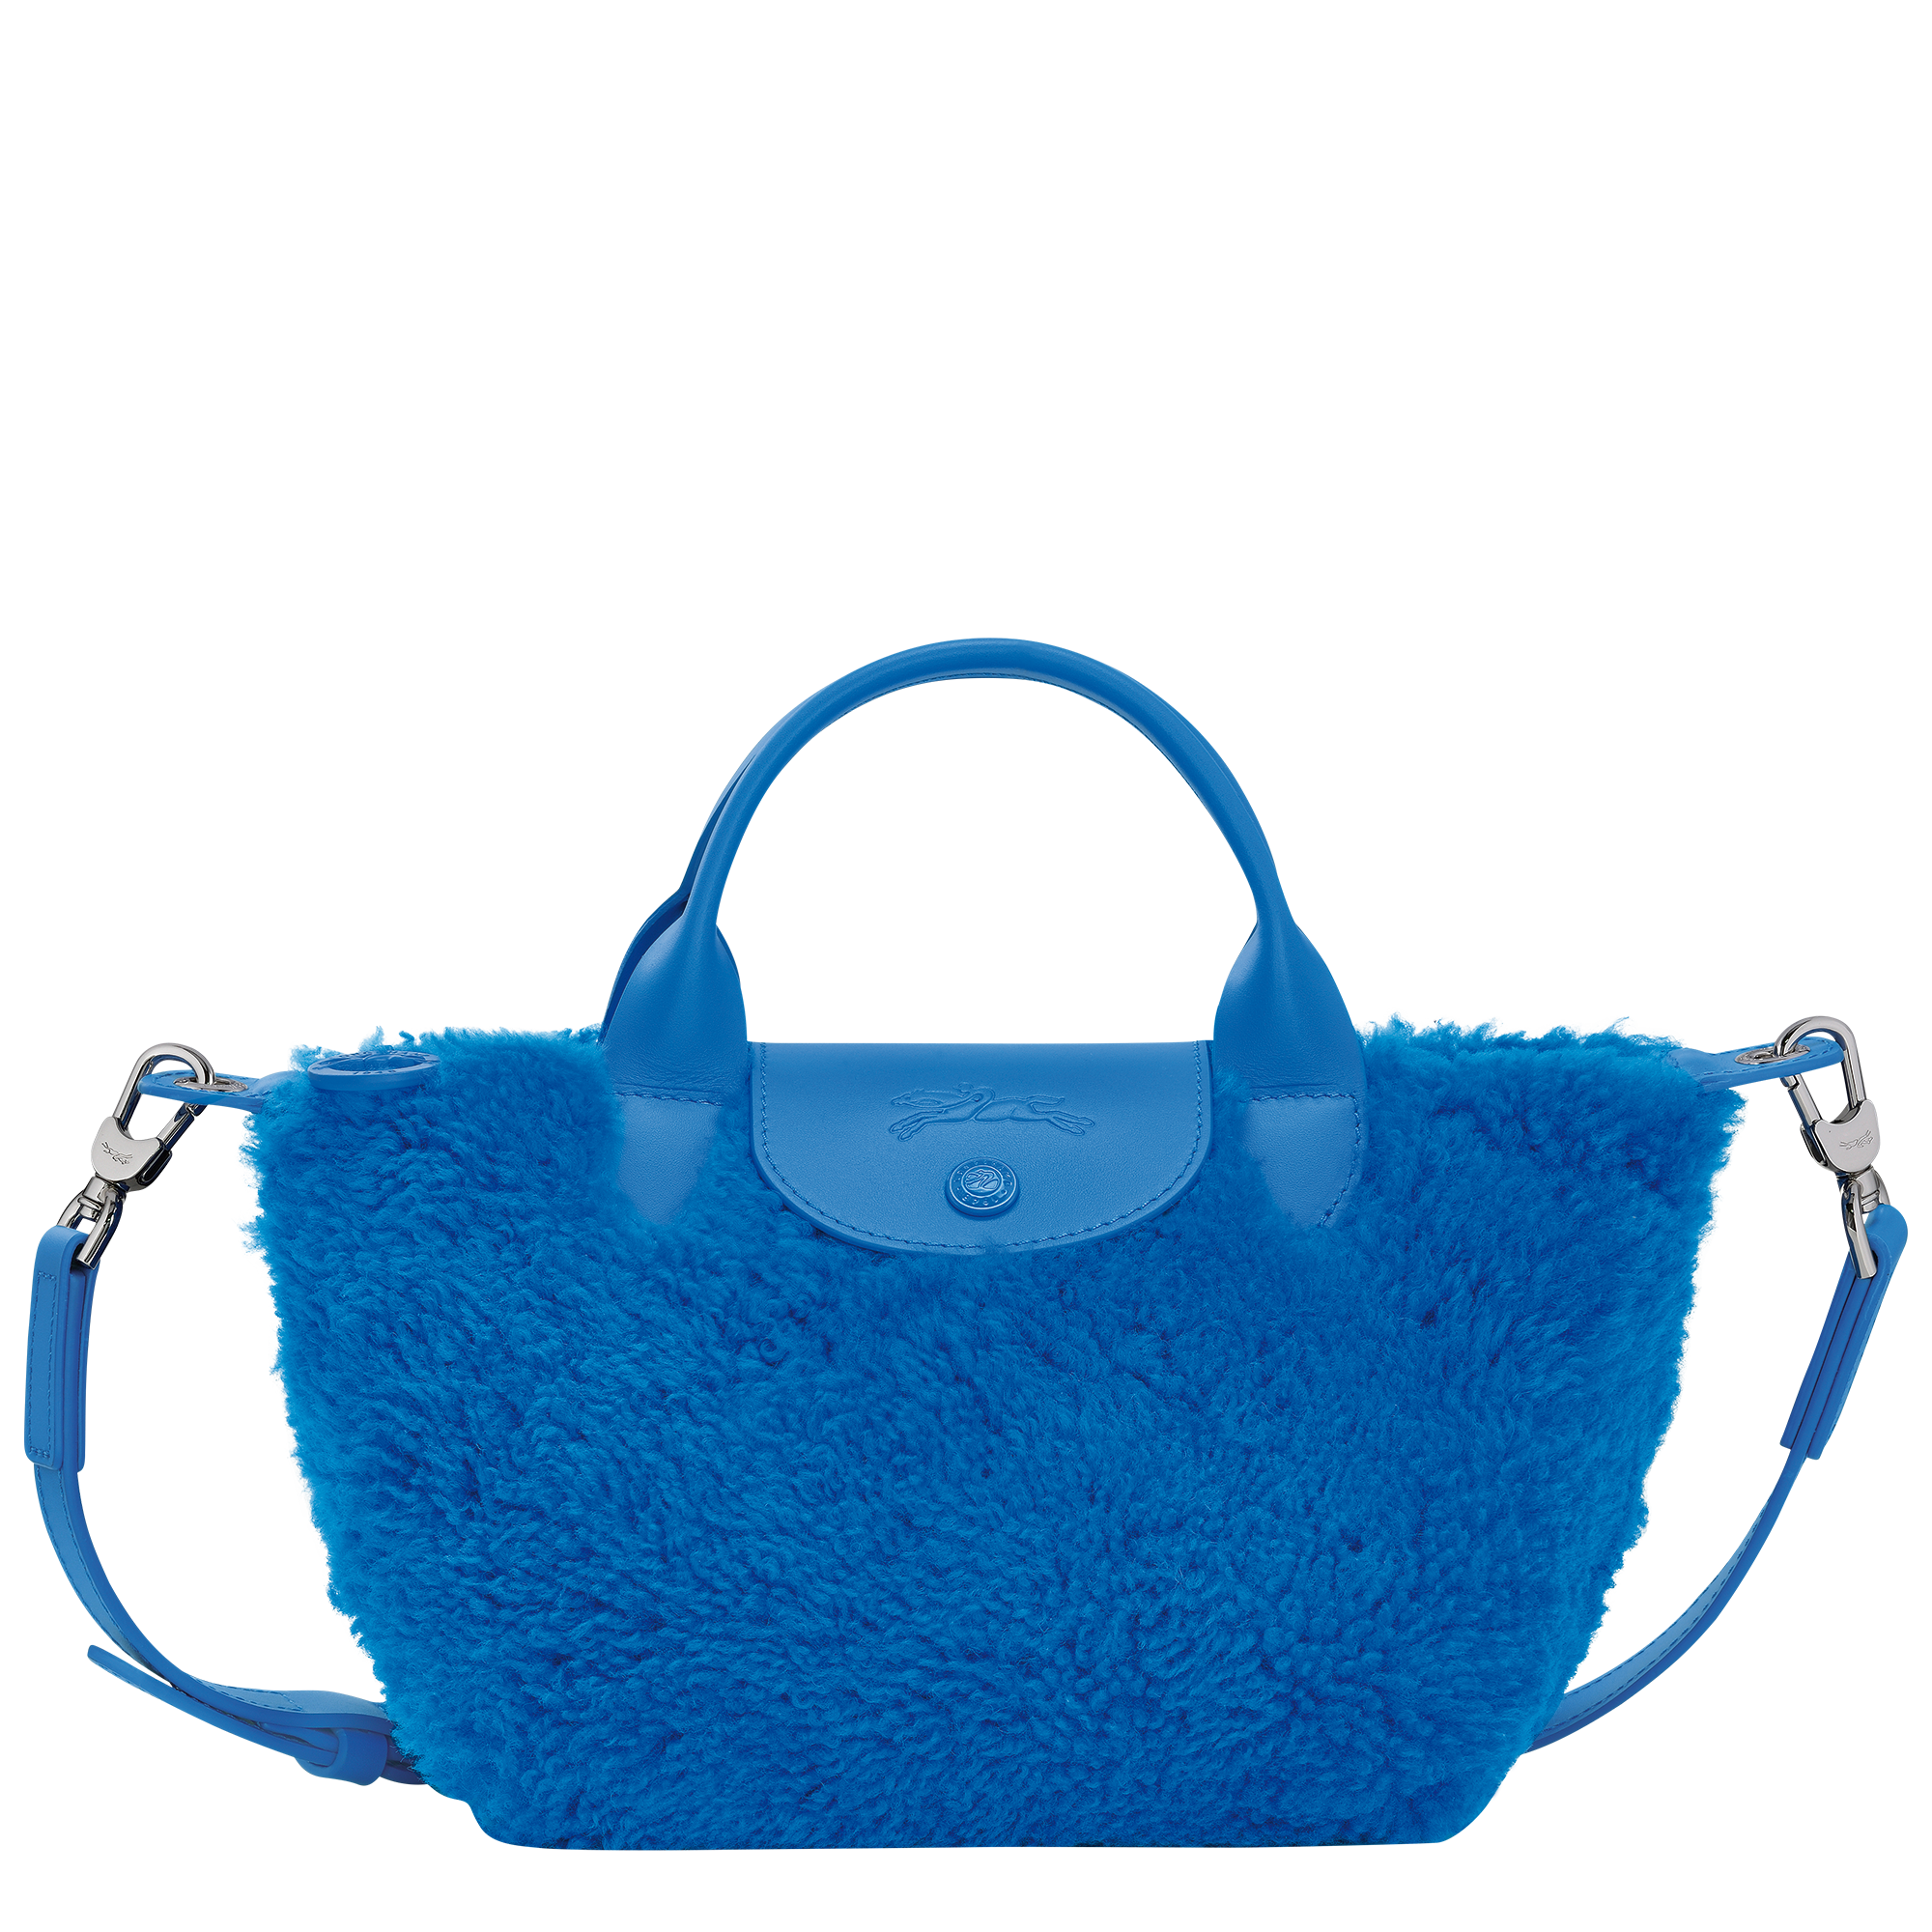 Le Pliage Xtra Handbag XS, Cobalt